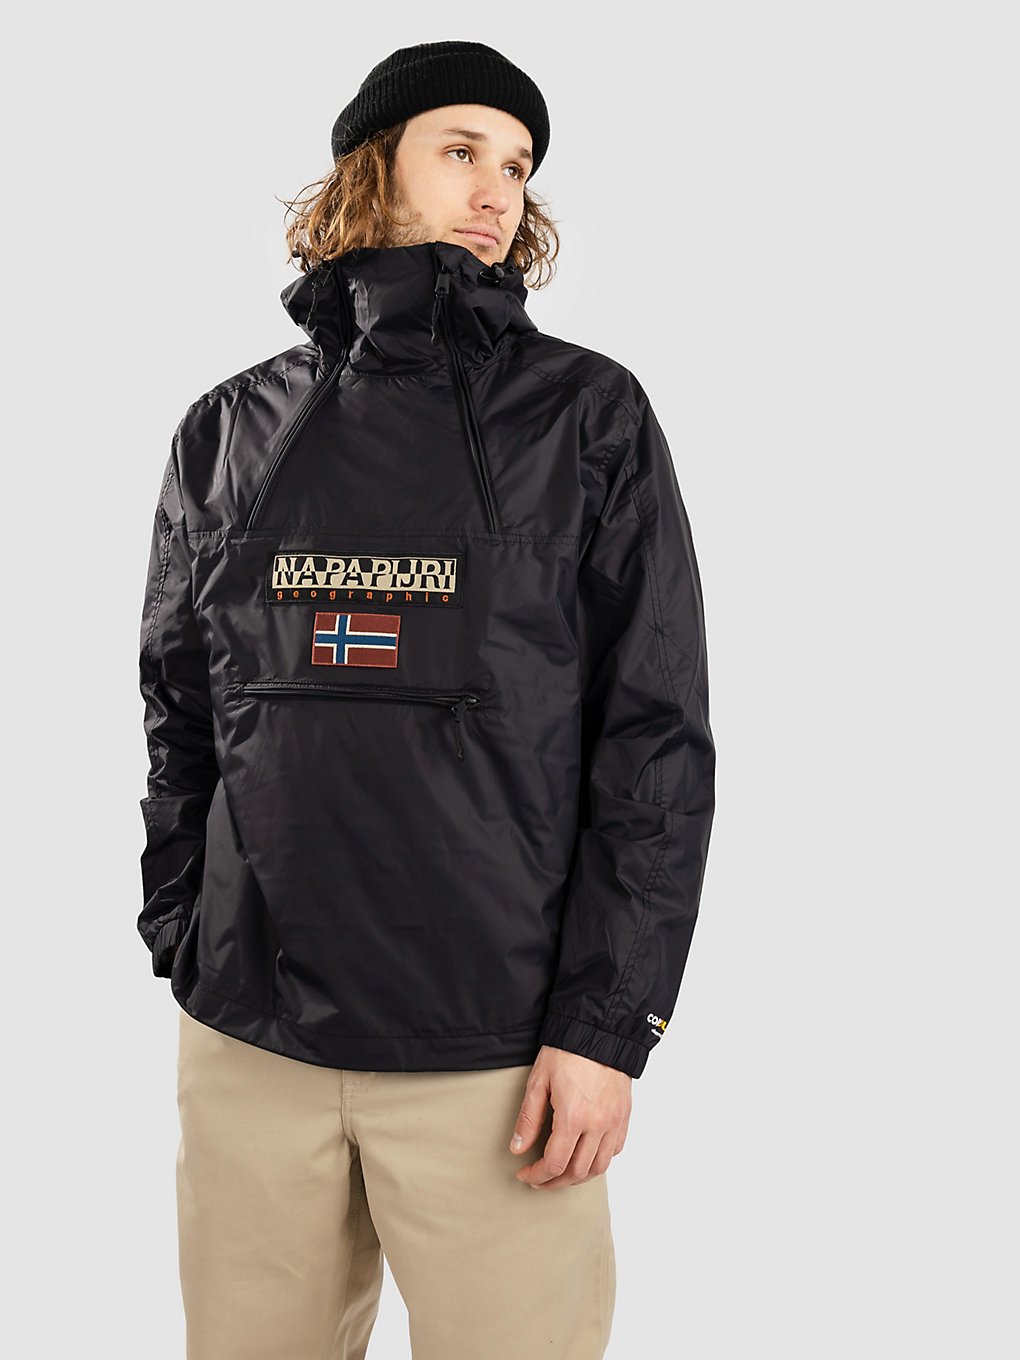 Napapijri Northfarer 2.0 Jacket black 041 kaufen